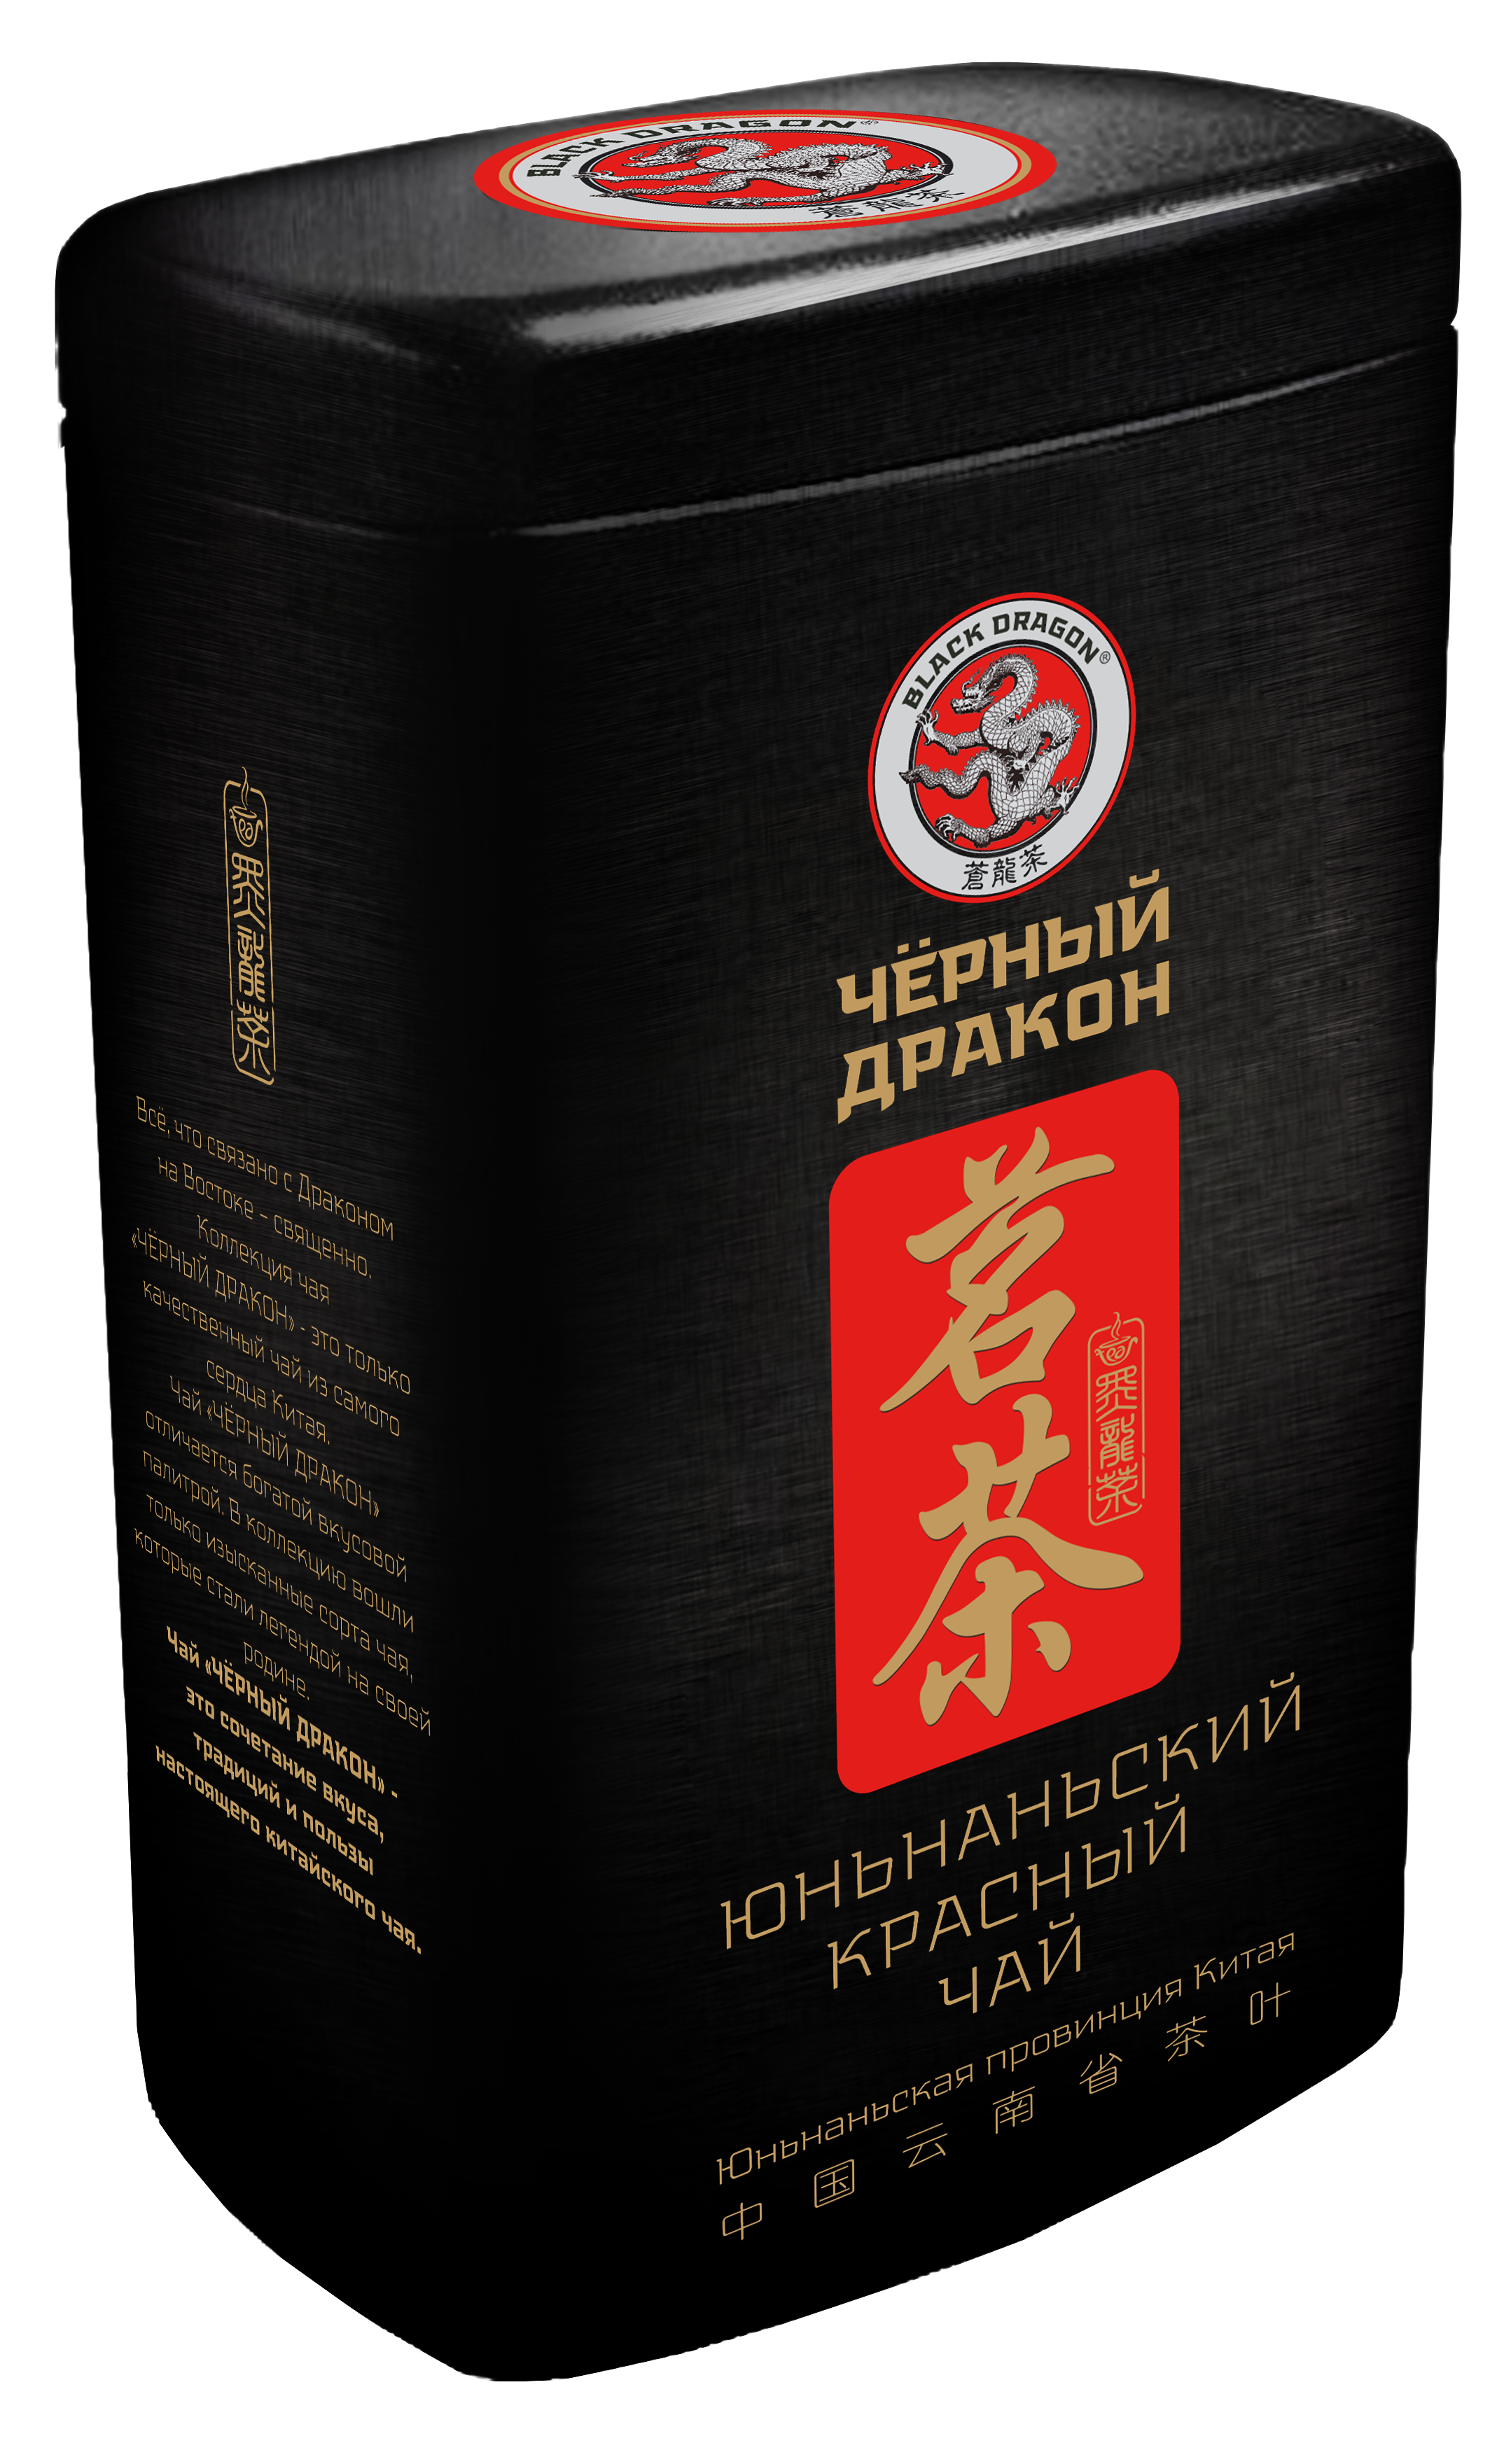 NB003-Т ЧД Юнаньский красный чай 100г/ж/б